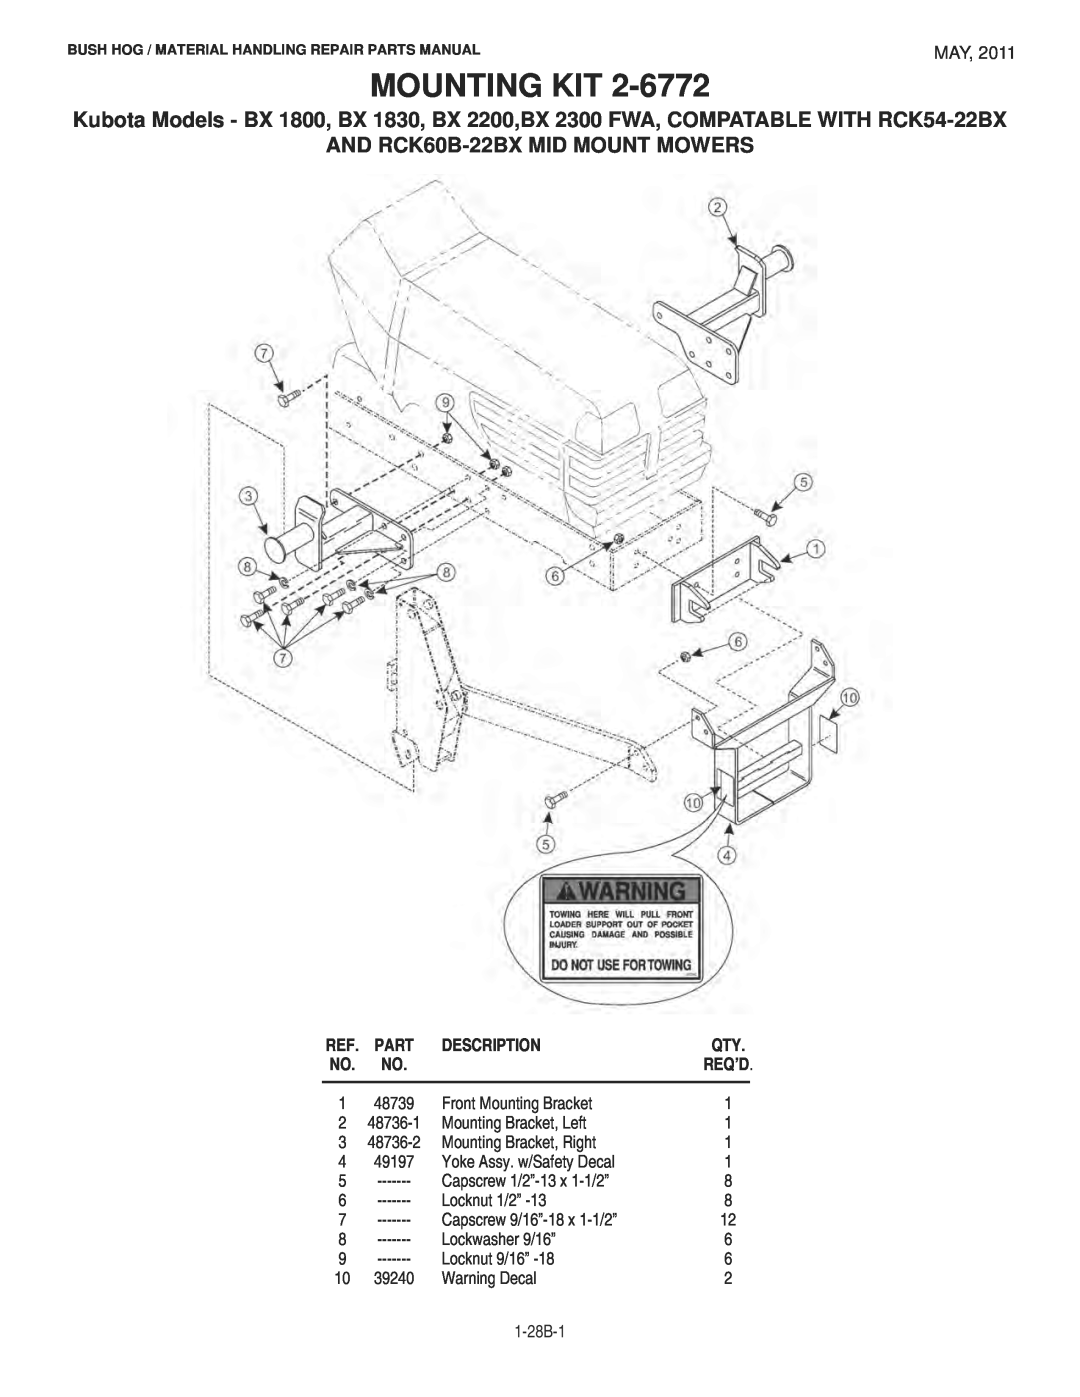 Bush Hog 1747 manual Mounting Kit, AND RCK60B-22BX MID MOUNT MOWERS, Description 